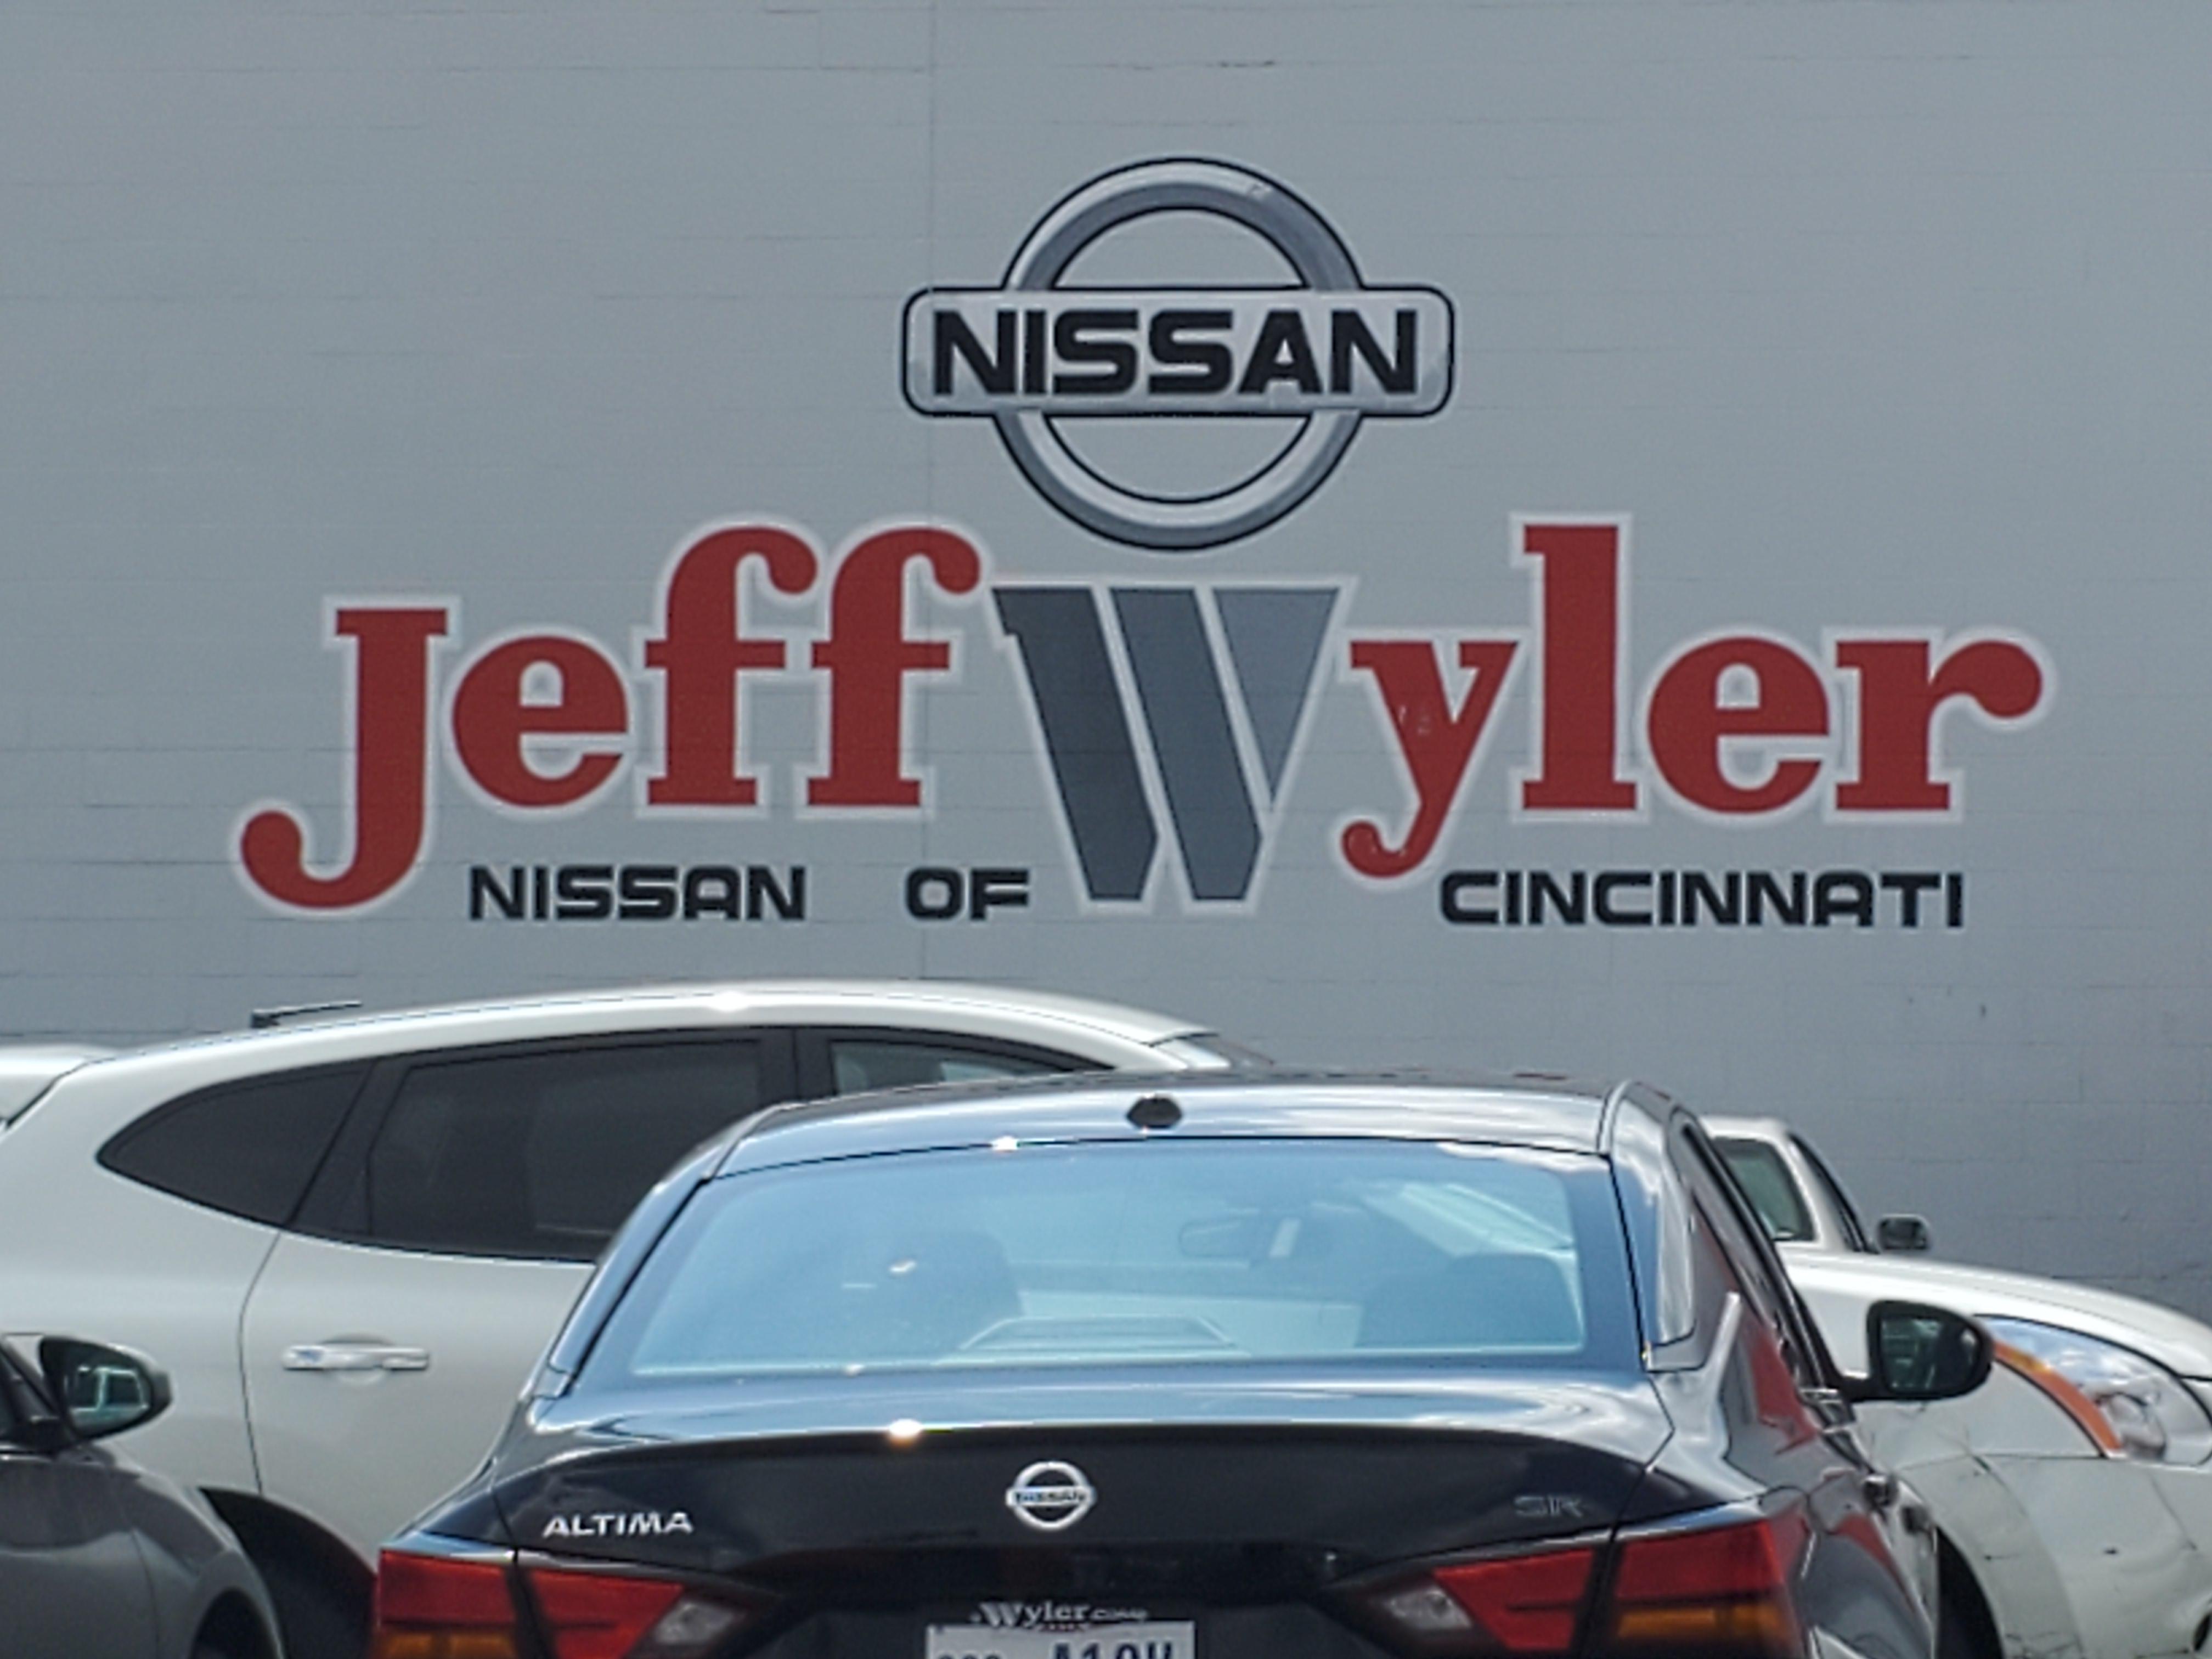 Jeff Wyler Nissan of Cincinnati - On Colerain Avenue - Call 513.385.1400 - New Nissan Car Sales